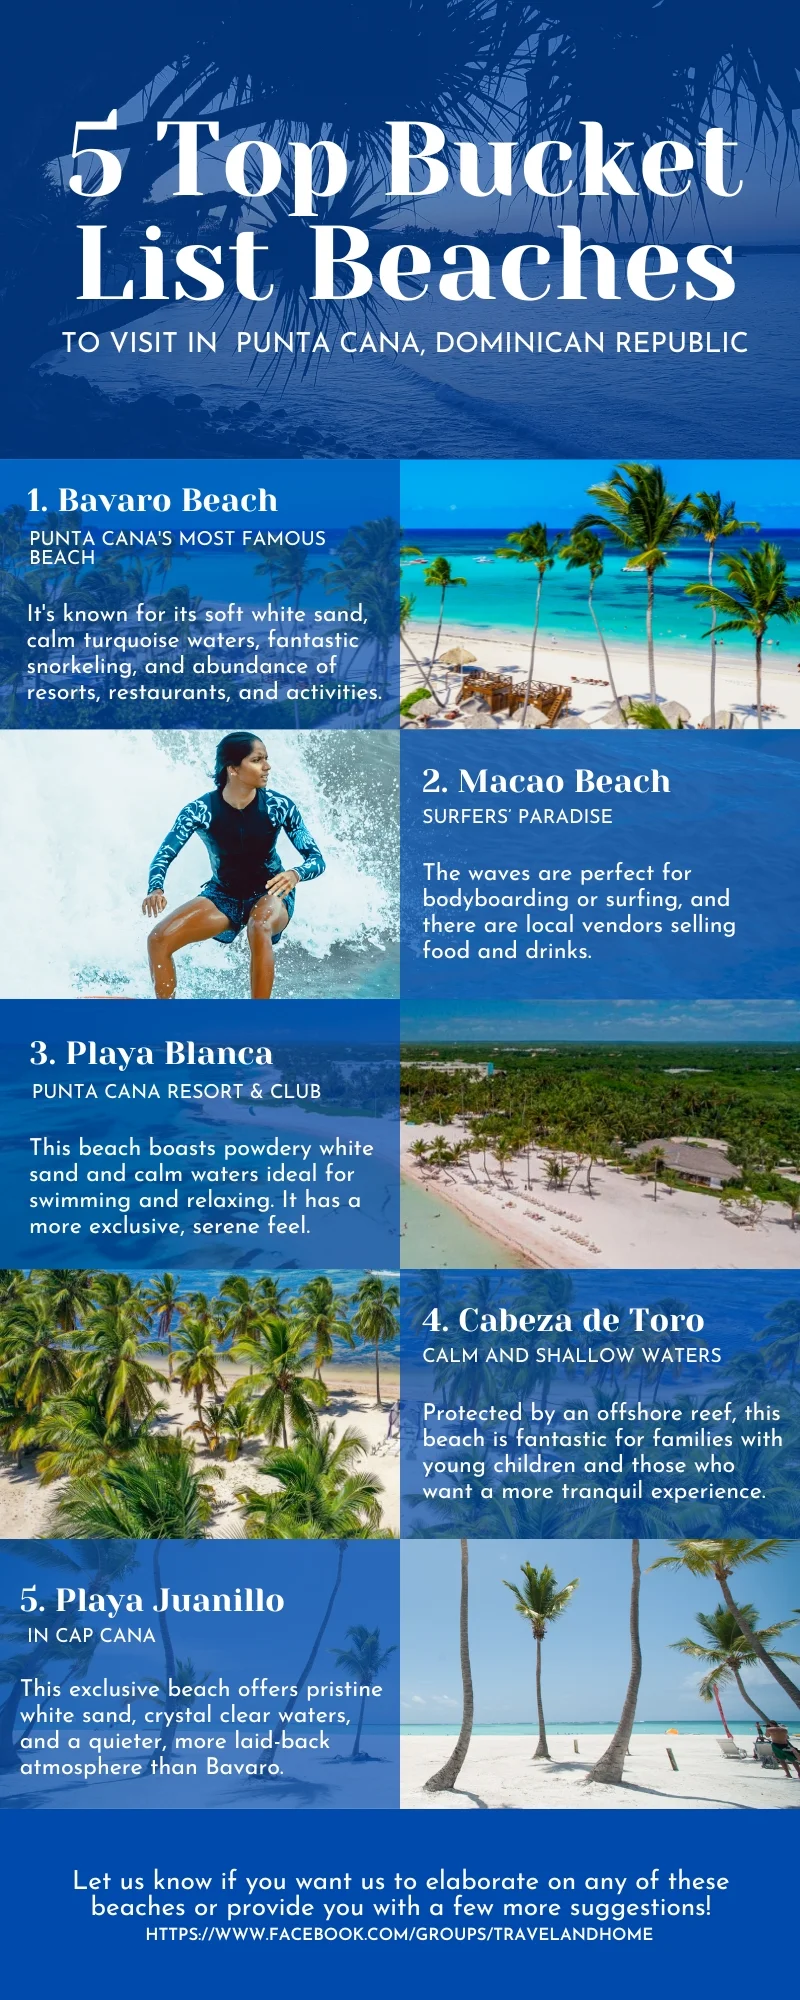 Punta Cana Bucket List Beaches Tourism Travel Infographic